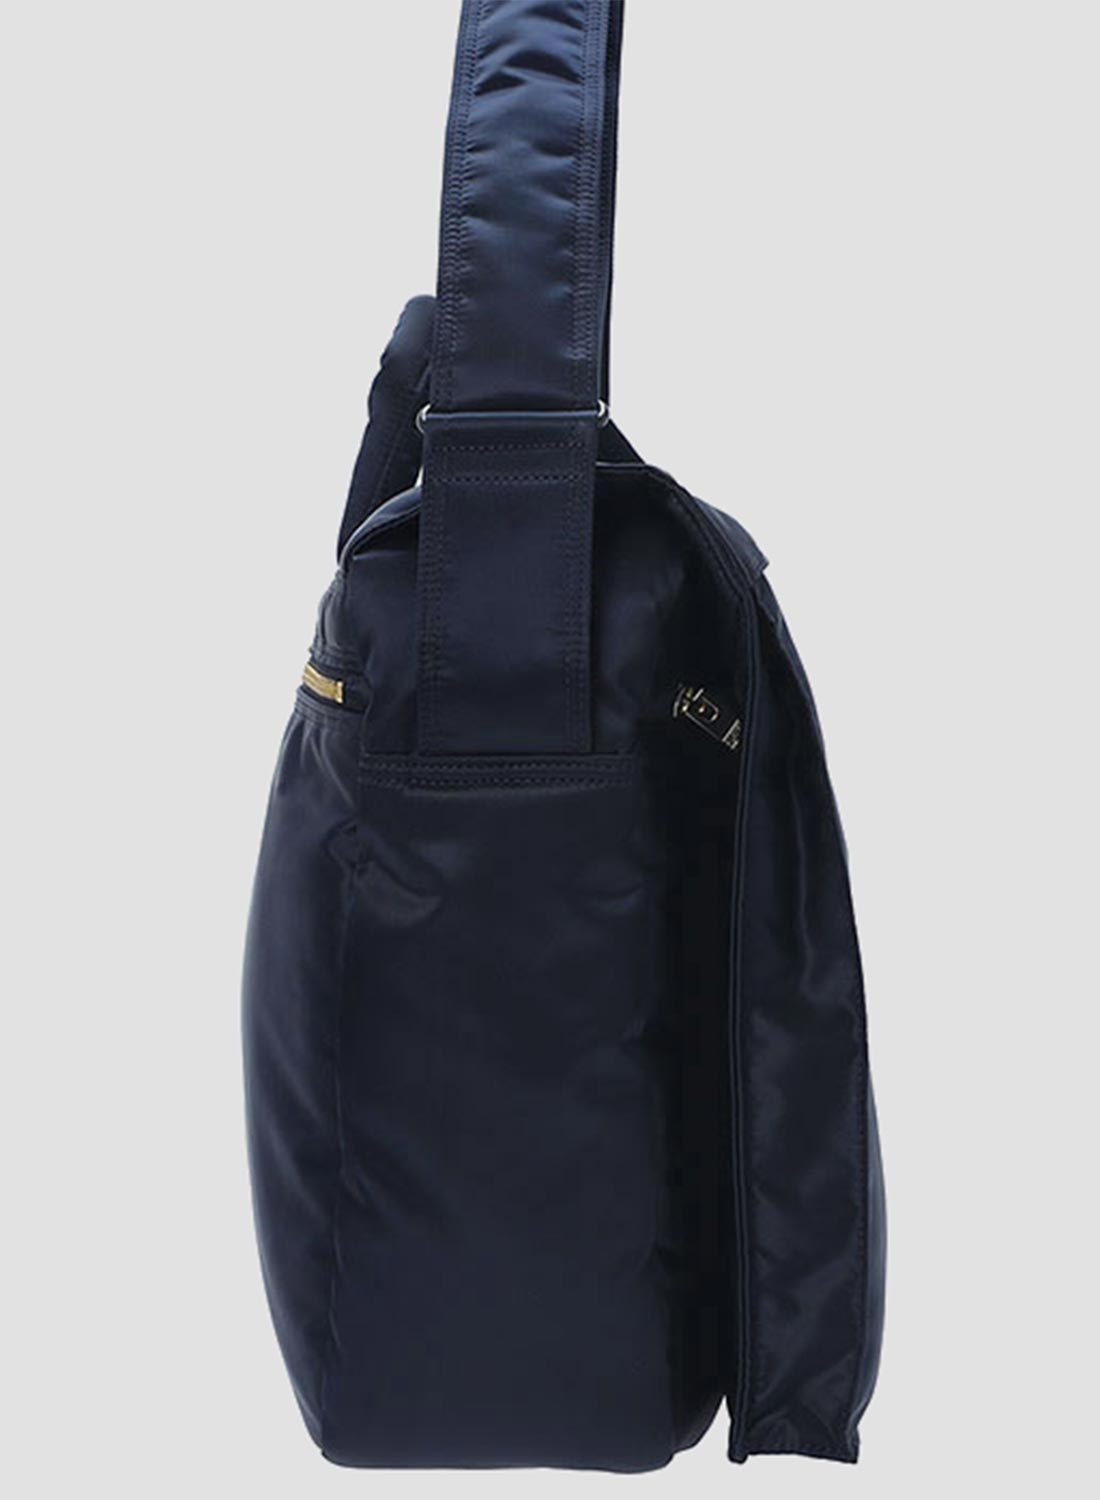 Porter-Yoshida & Co Tanker 2Way Shoulder Bag in Iron Blue - 3